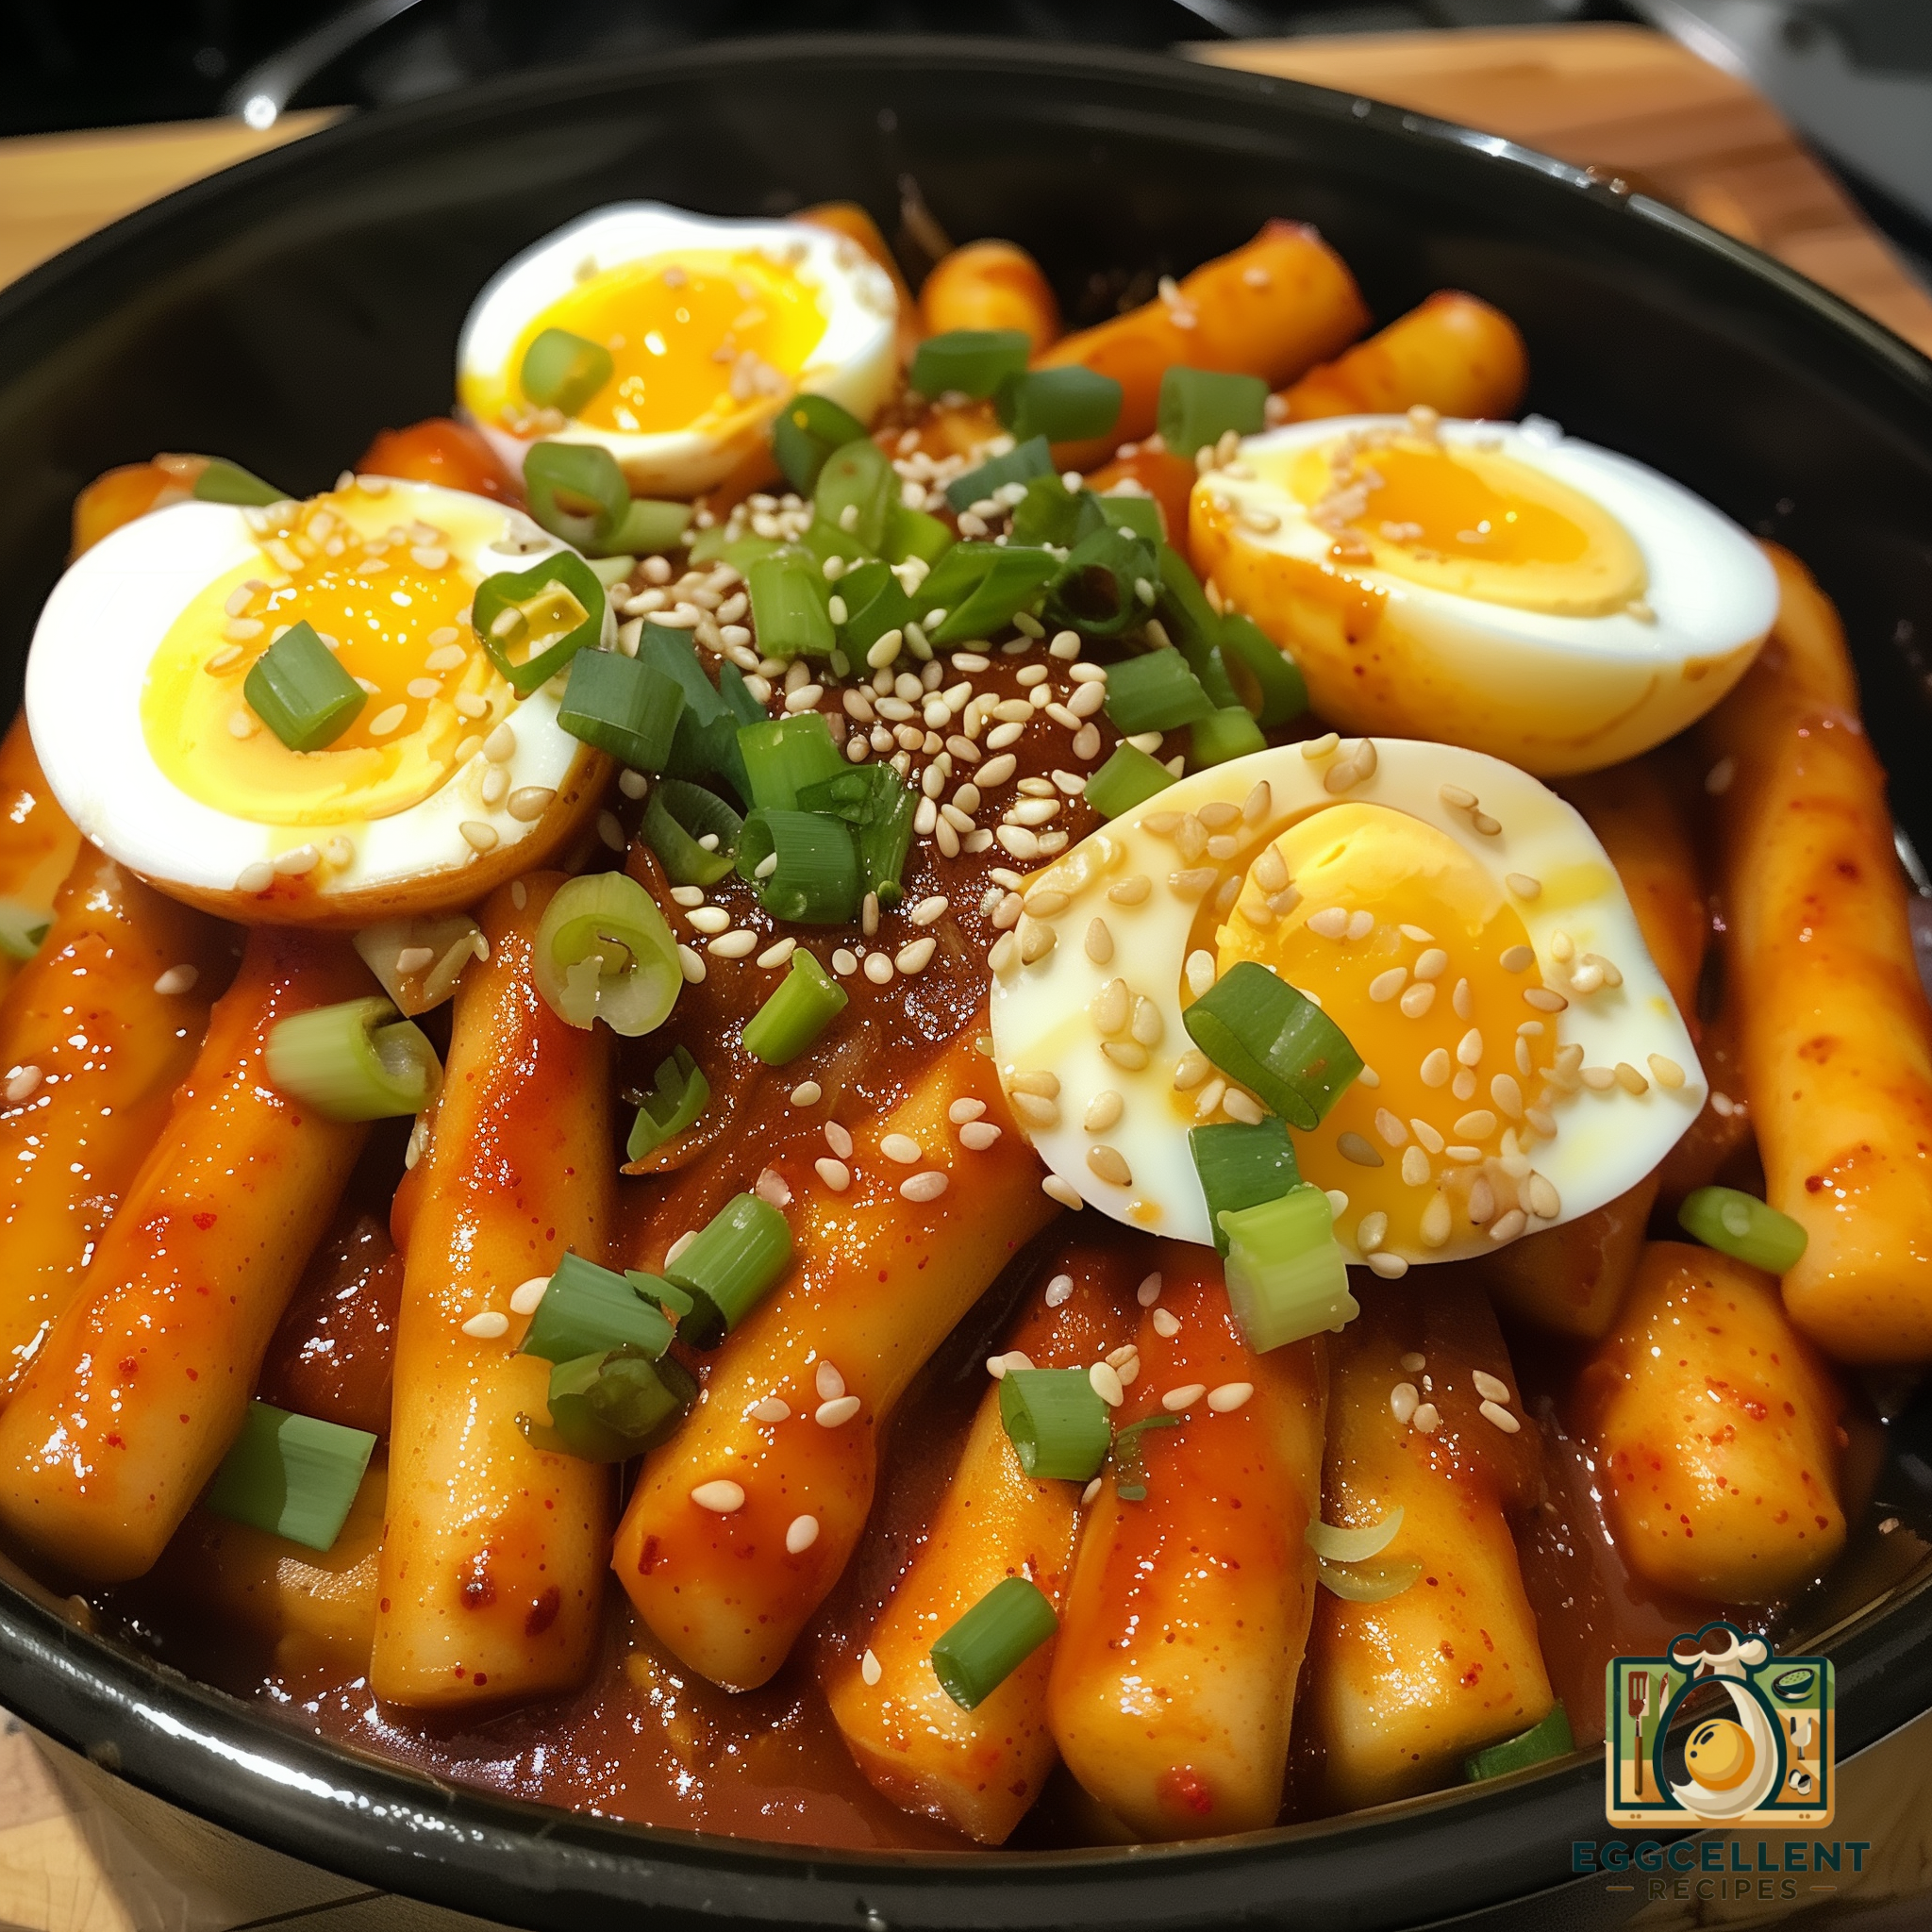 Korean Spicy Stir-Fried Rice Cakes (Tteokbokki with Boiled Eggs) Recipe